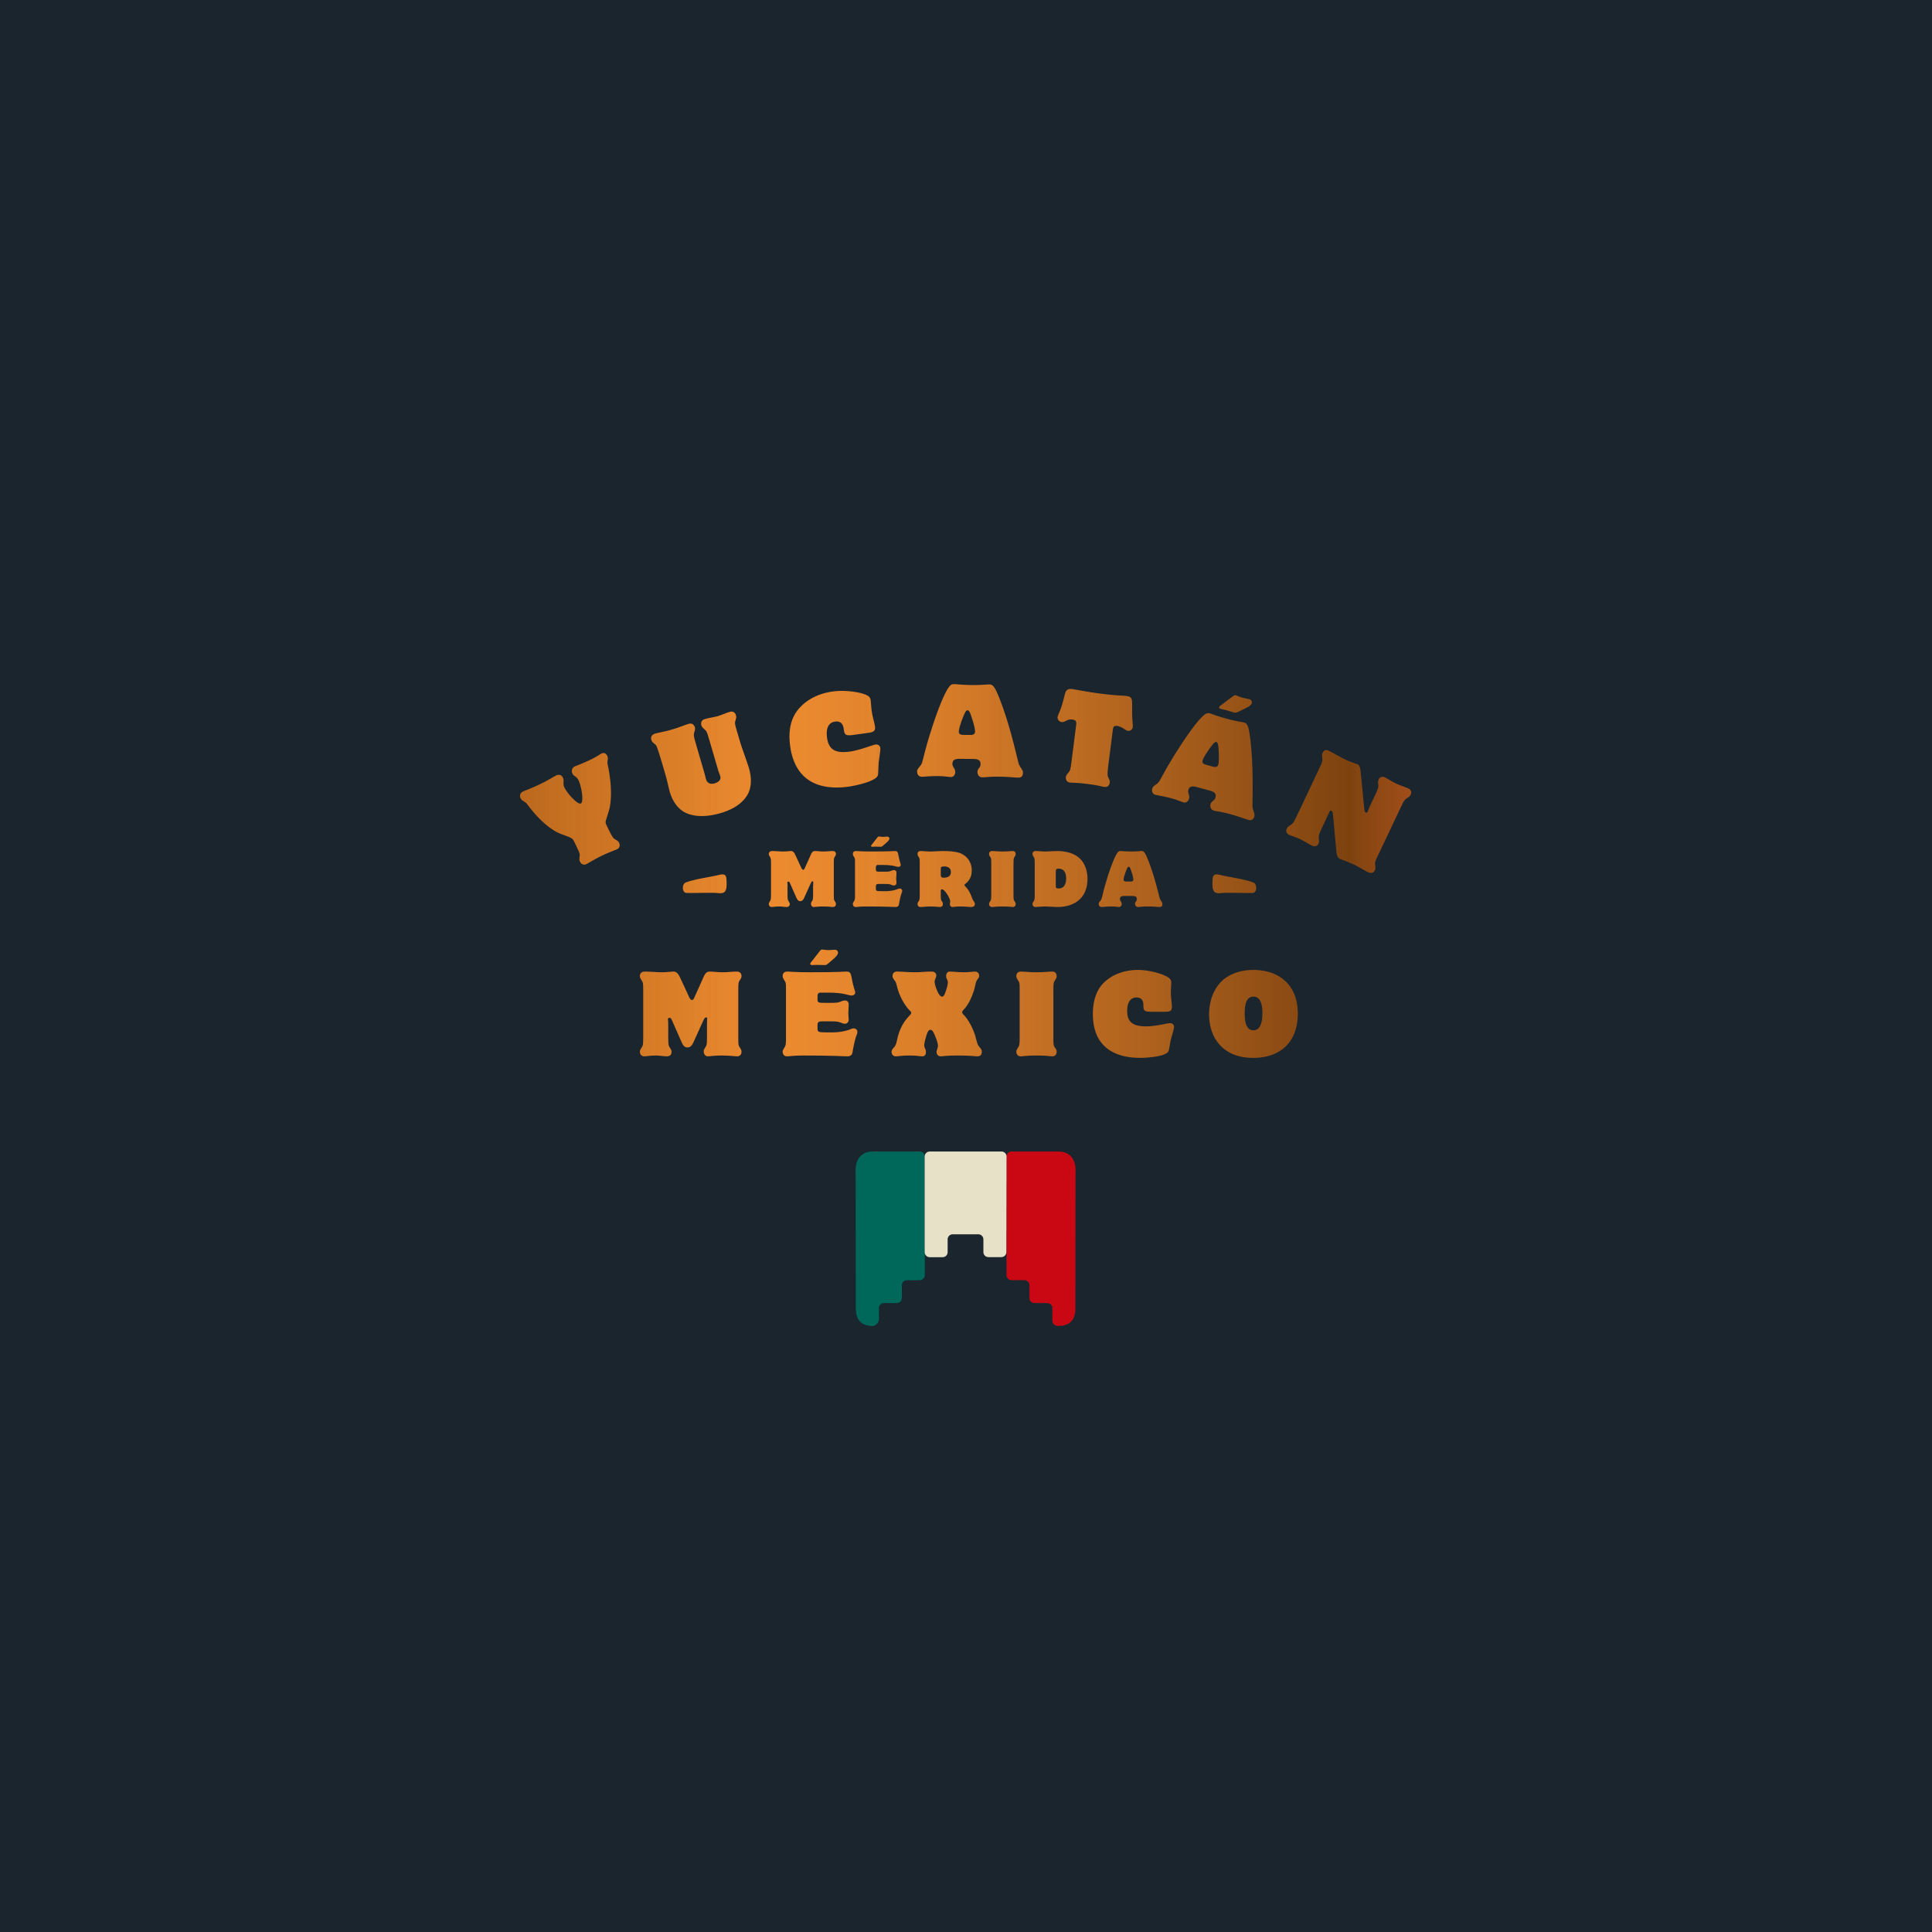 Yucatán Mérida Mexico Logo by Sunday Lounge